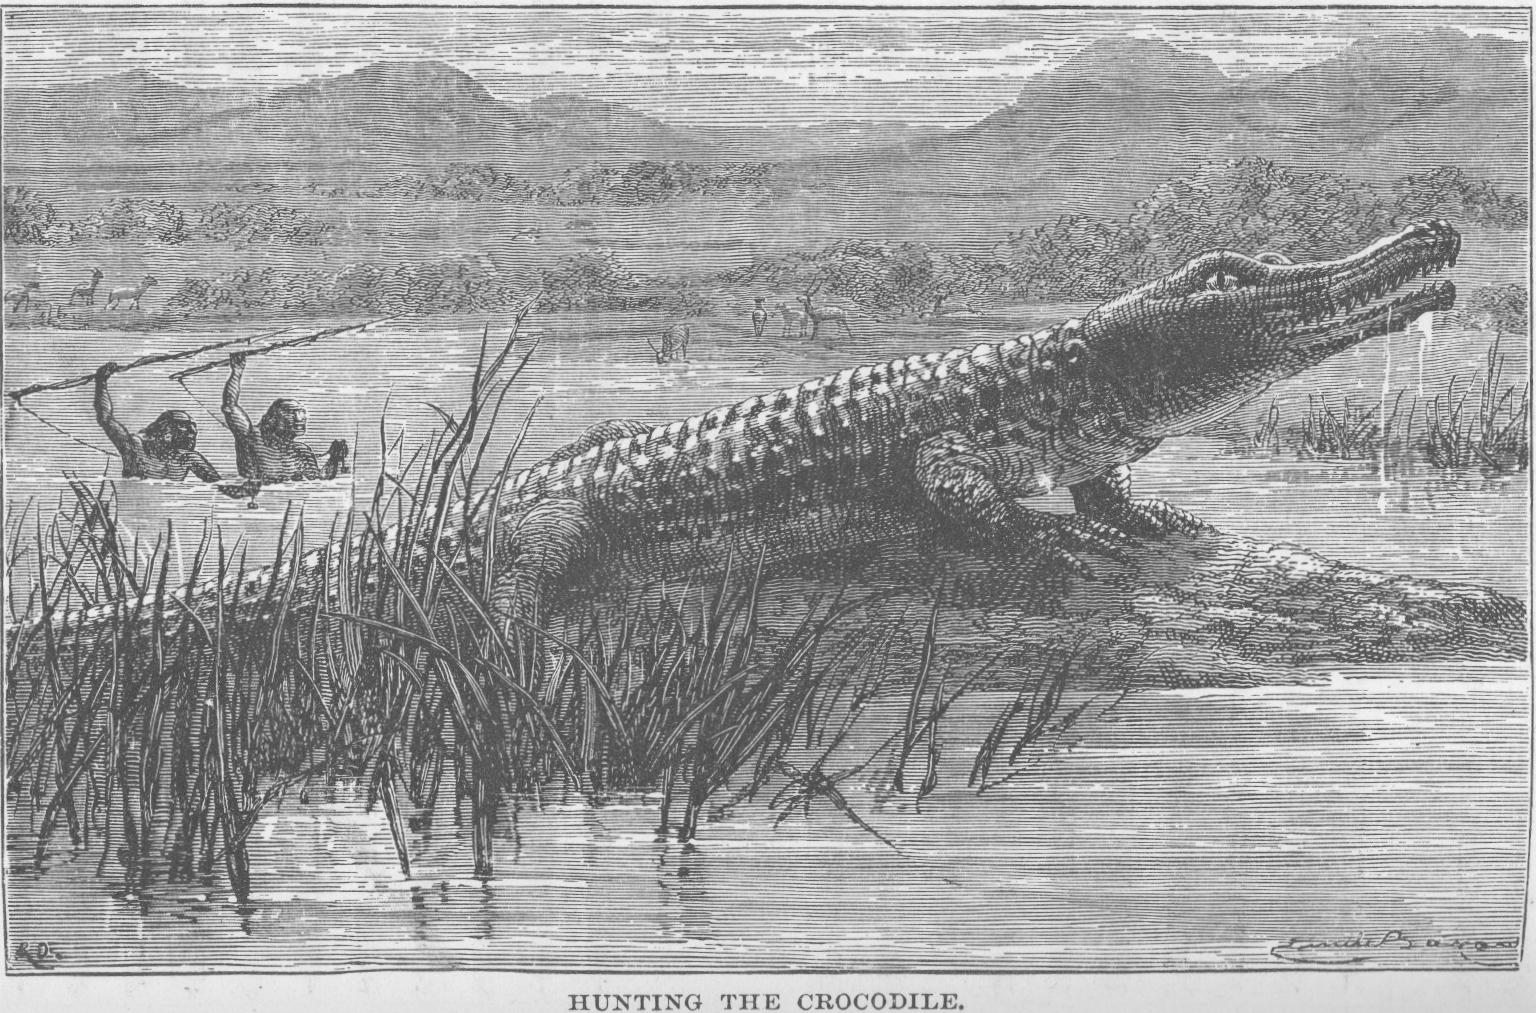 Hunting the crocodile